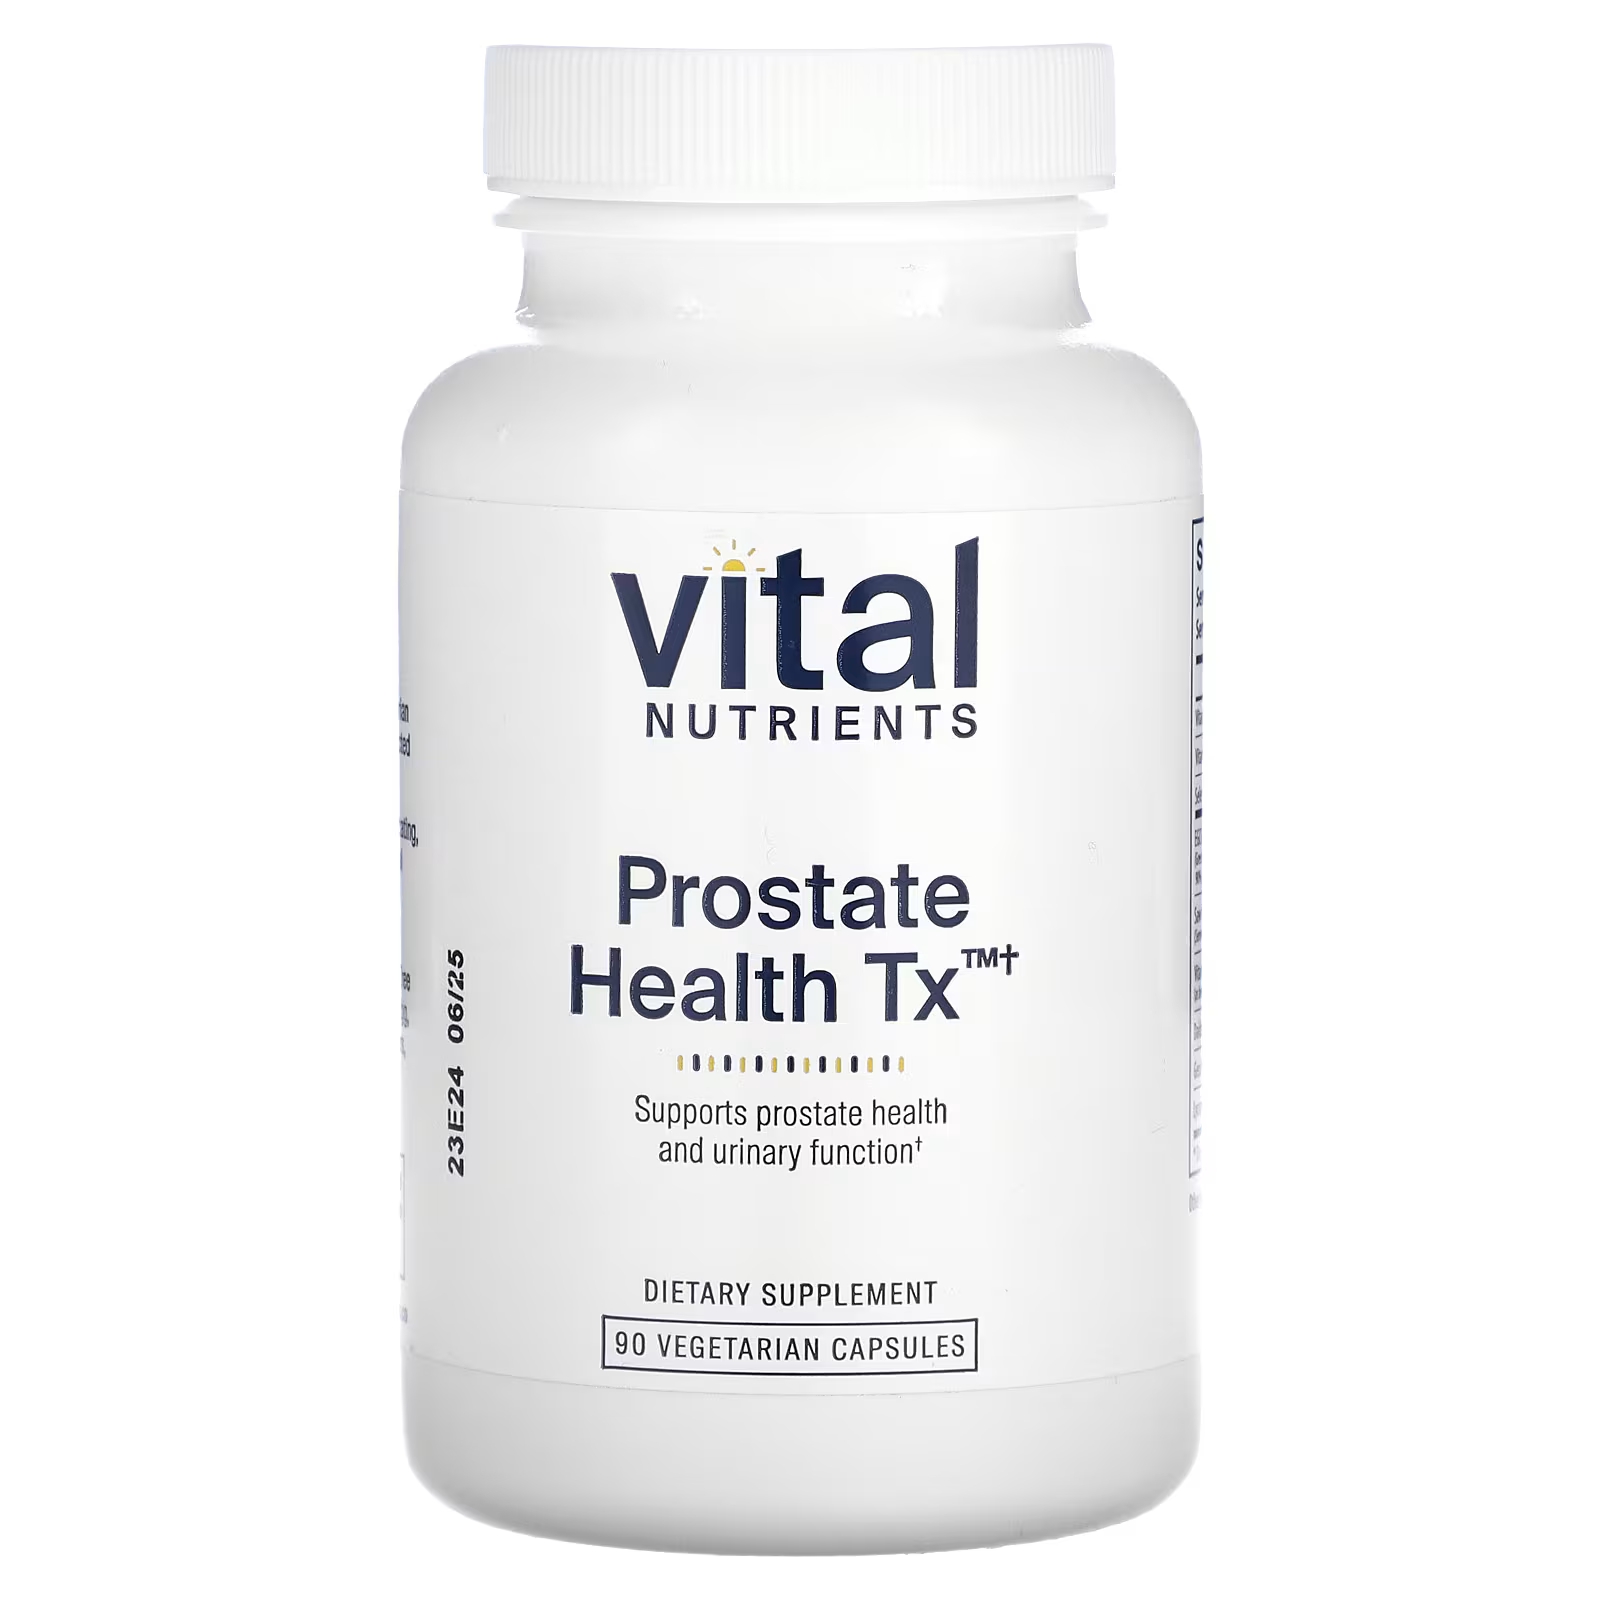 Пищевая добавка Vital Nutrients Prostate Health Tx, 90 капсул 6 12 24 30pcs man prostatic navel patch prostatitis prostate treatment natural herbal medical plaster painkiller men health care